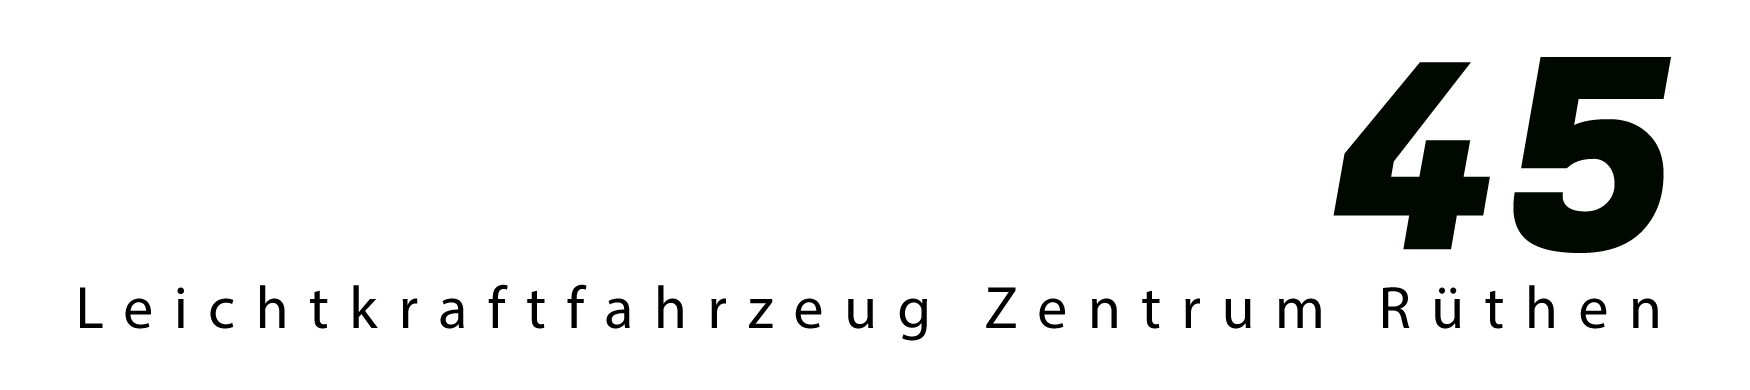 DeltaDrive45-Logo